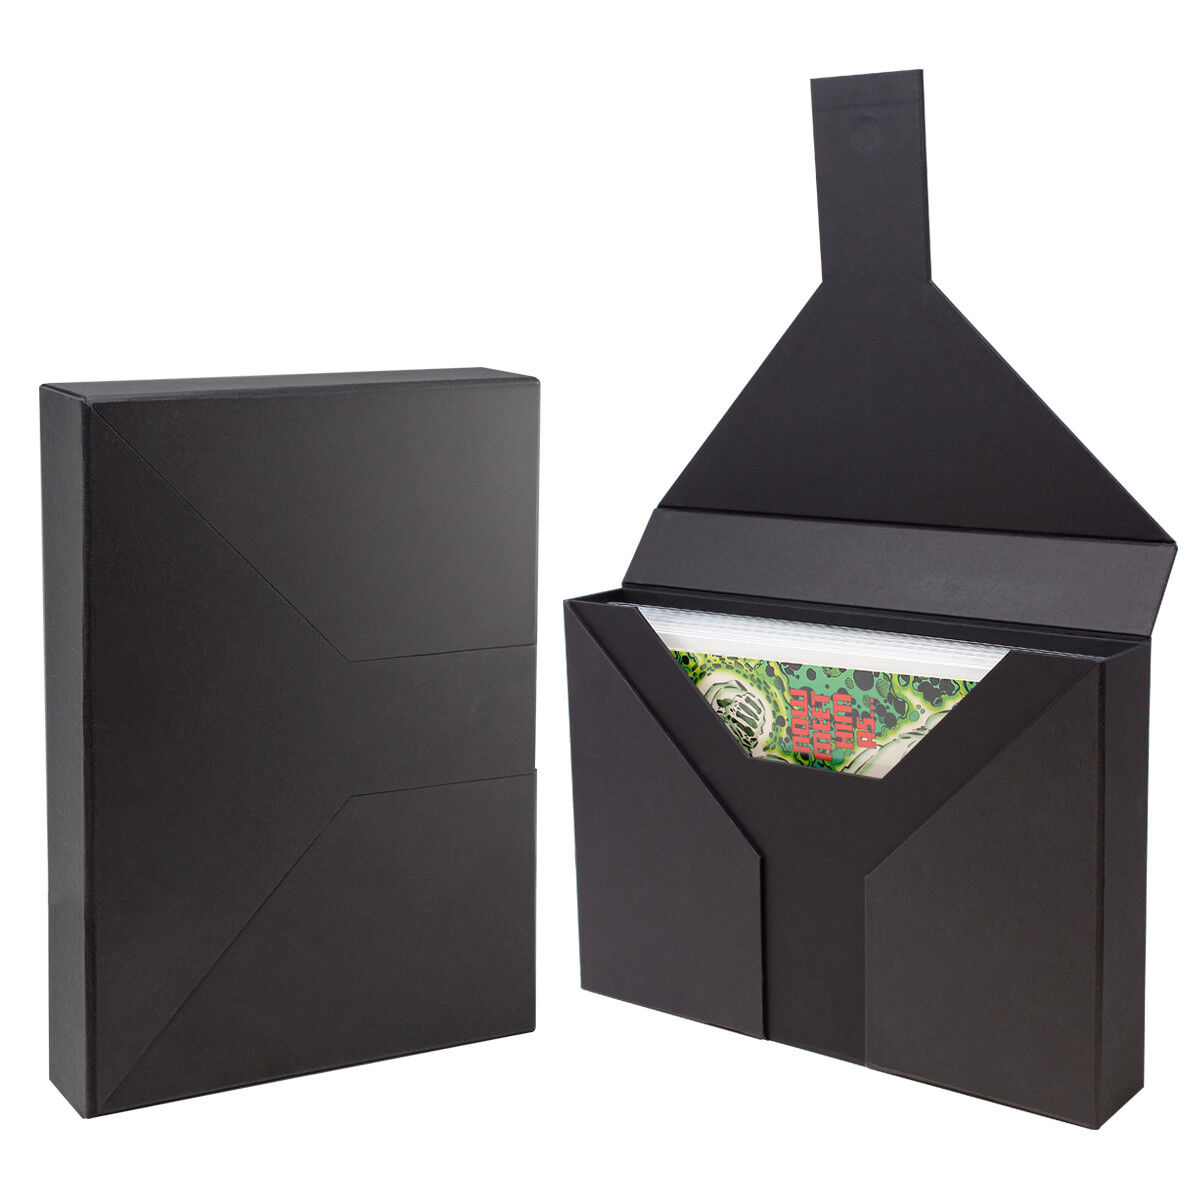 Ultra Pro Comic Case Magnetic Closure Storage Portfolio Box Book Carrying Case